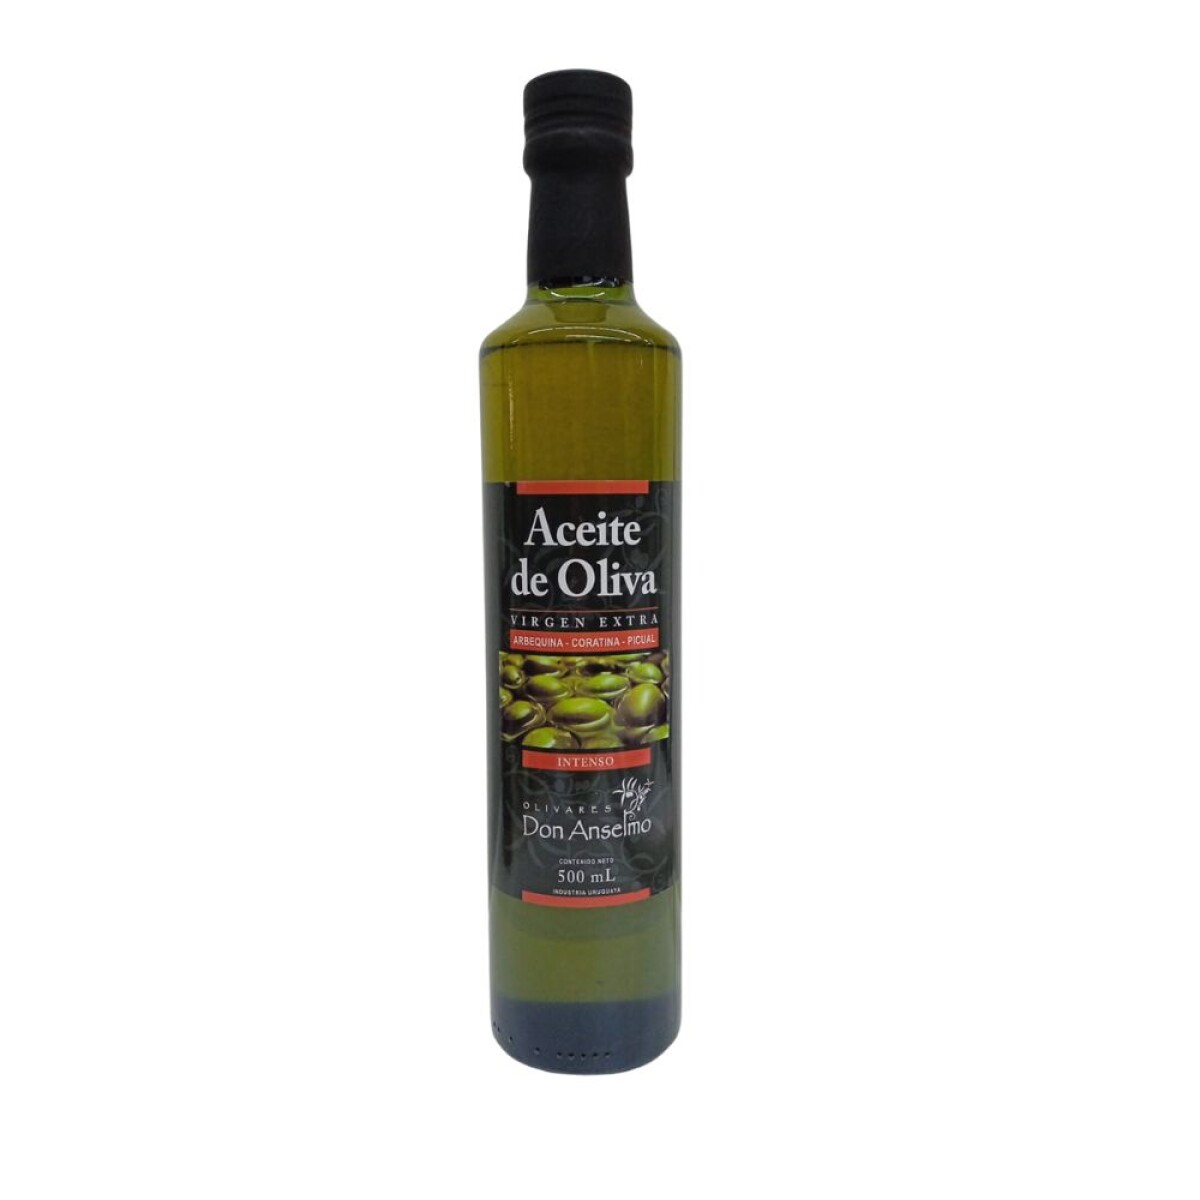 Aceite de oliva Don Anselmo 500ml 